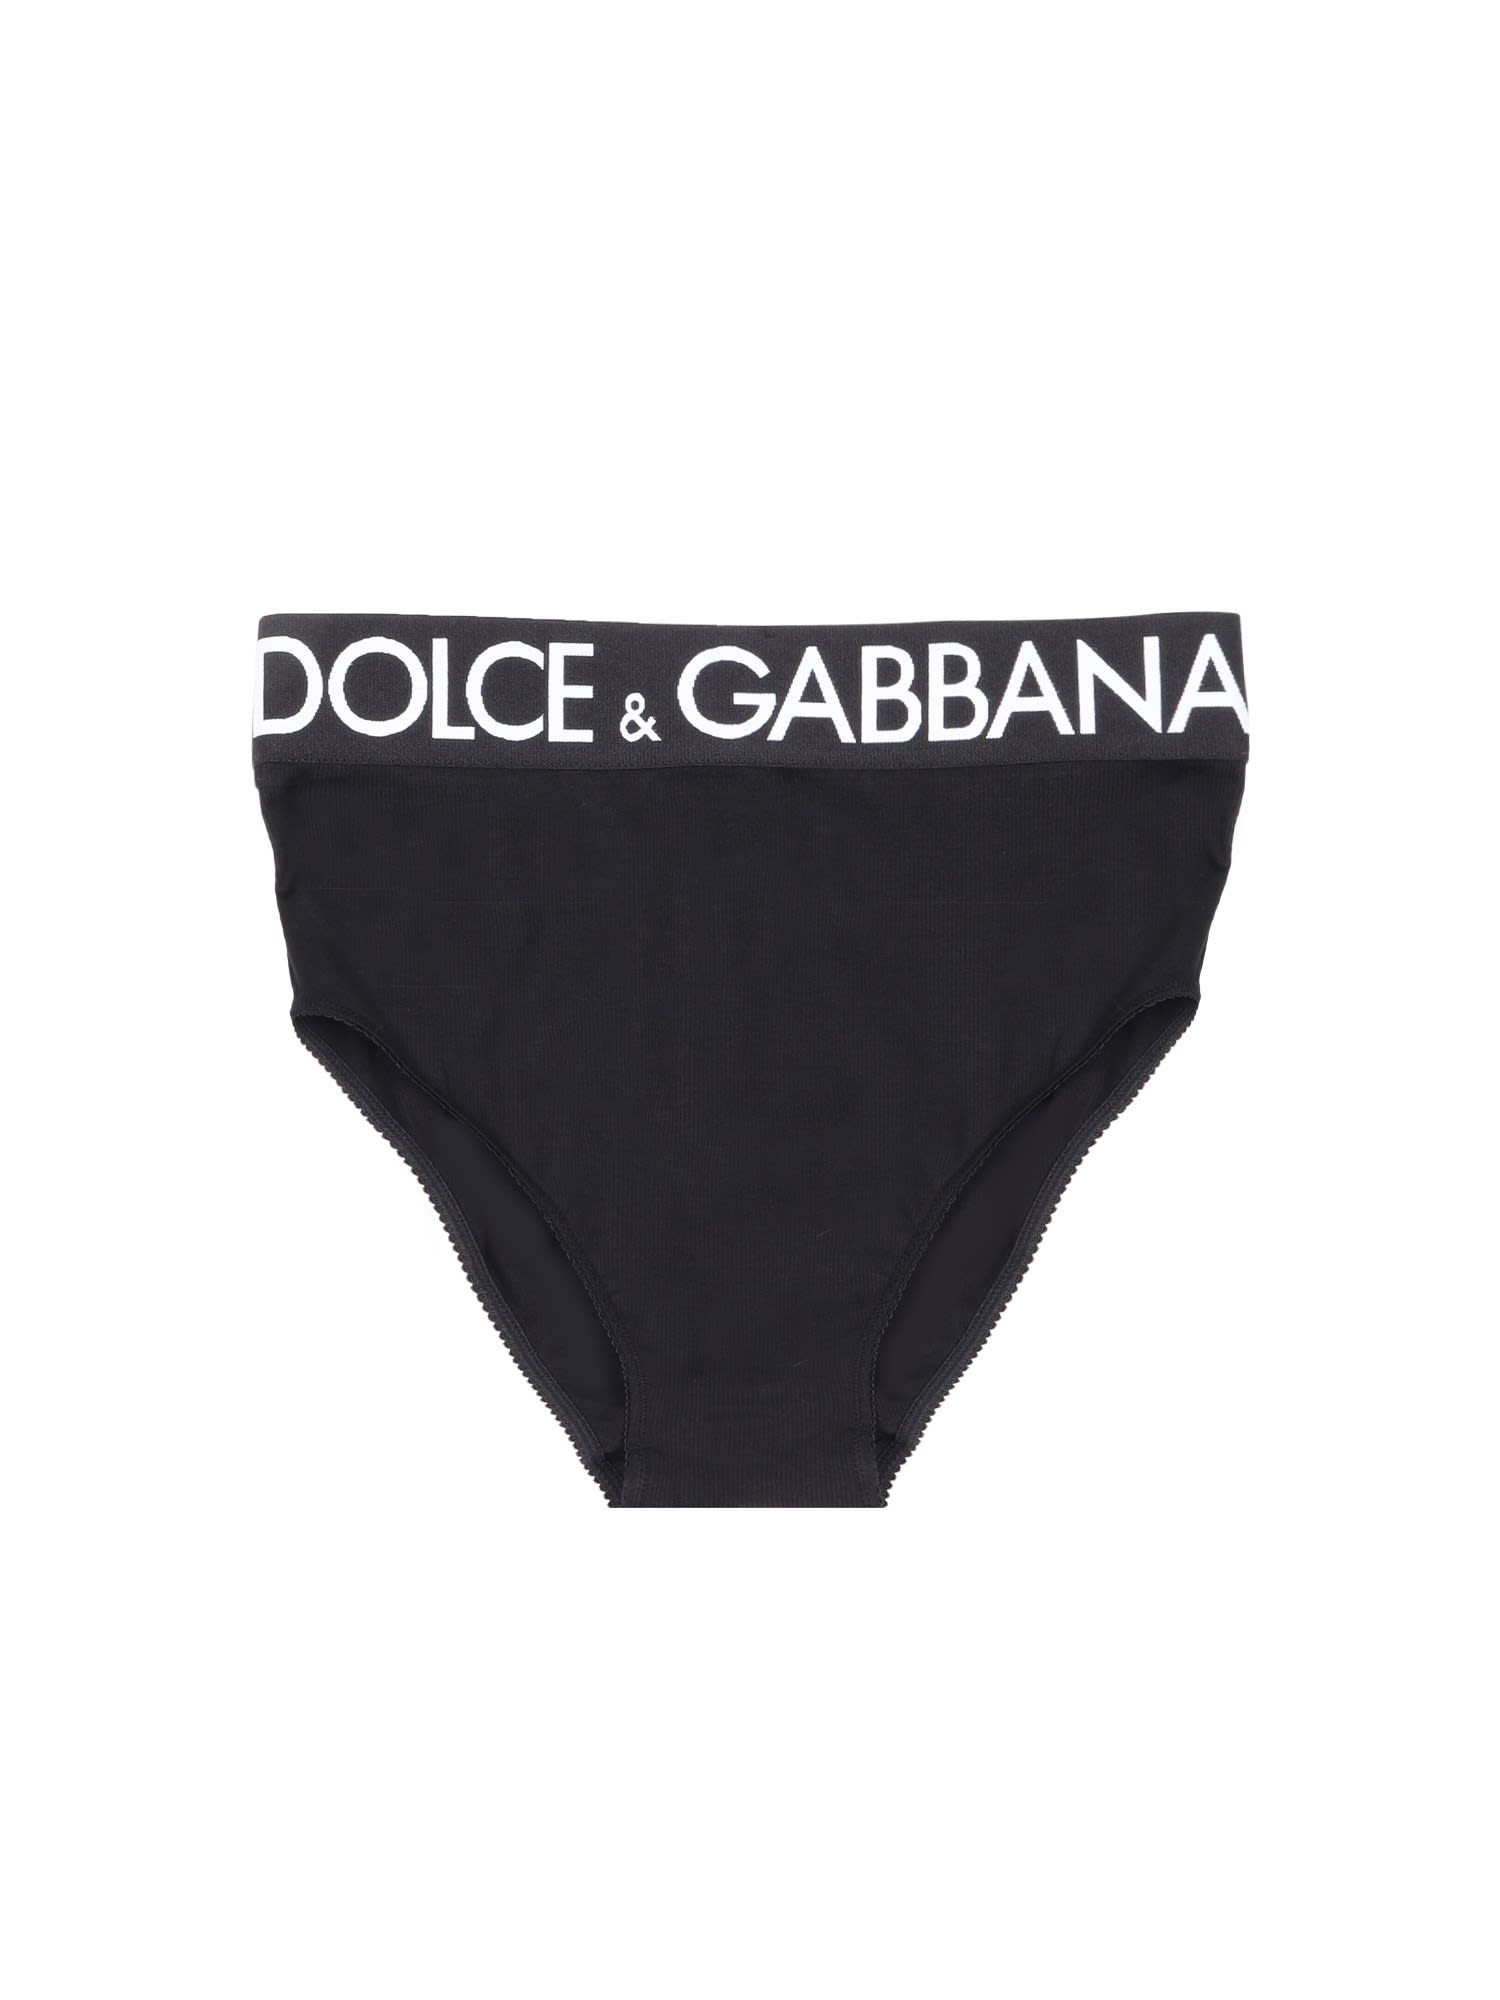 Dolce & Gabbana Briefs With Logoed Band